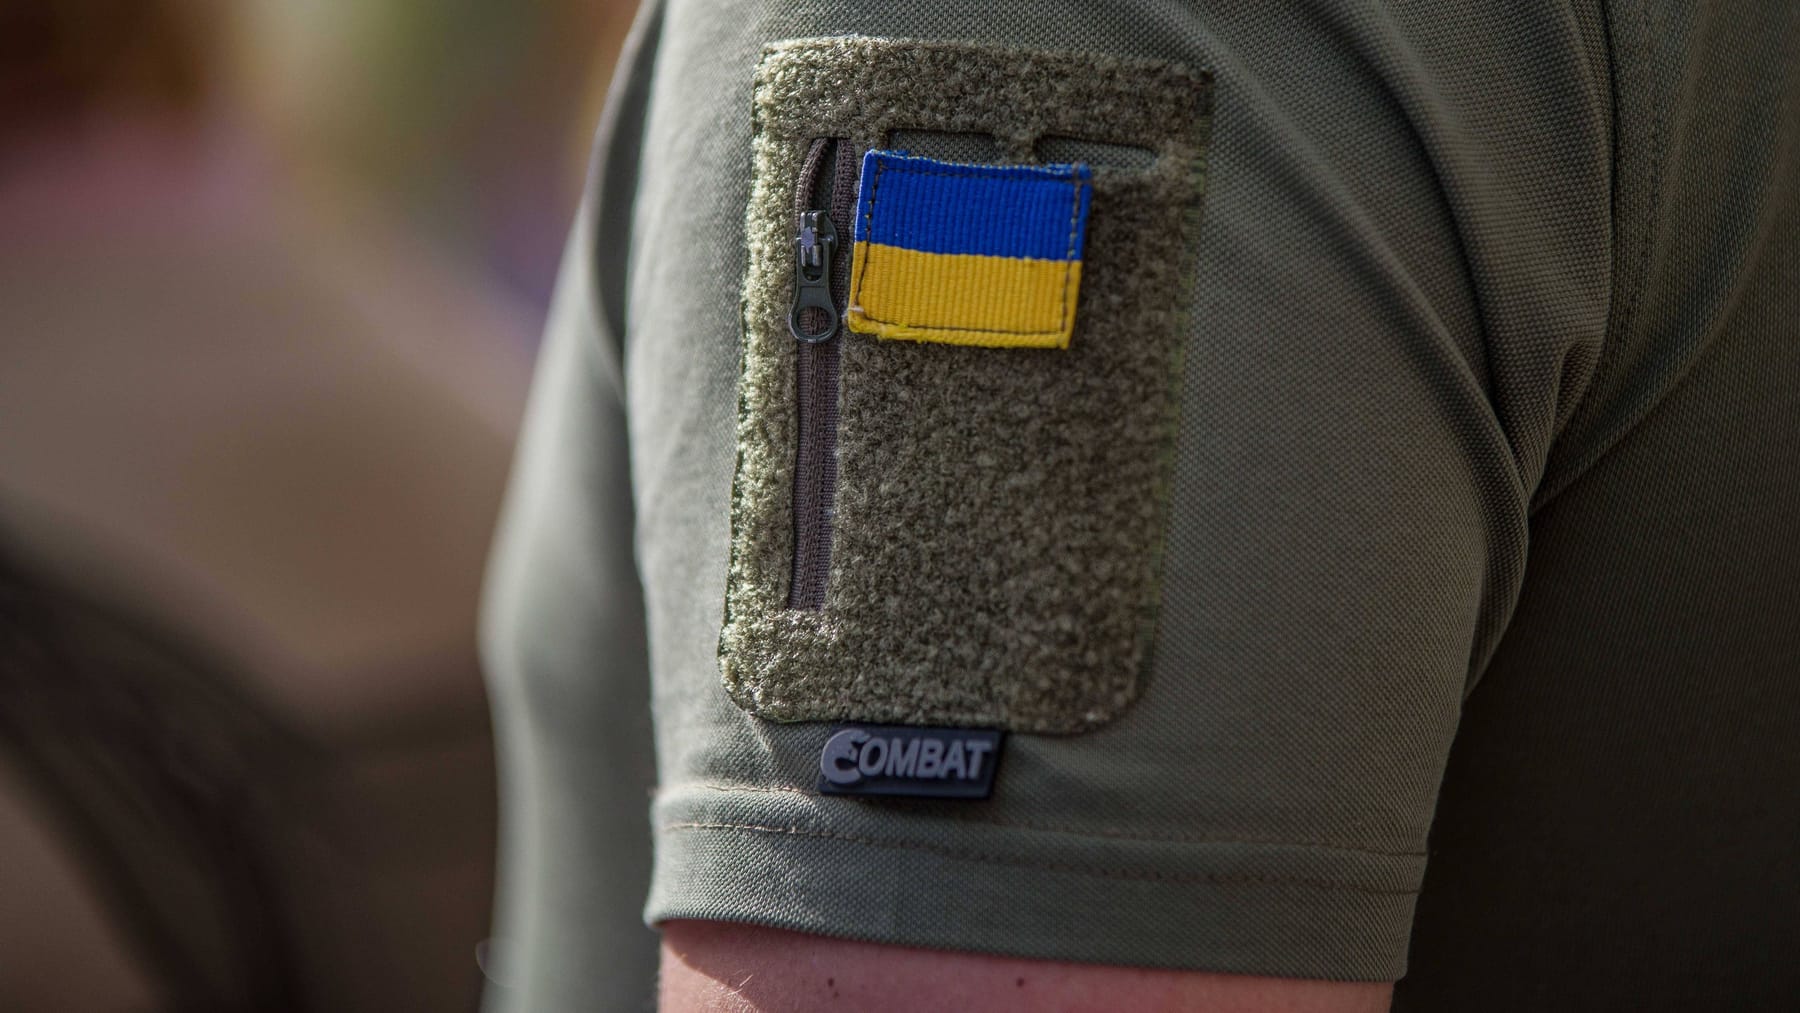 Zwei ukrainische Soldaten getötet – Generalstaatsanwalt ermittelt